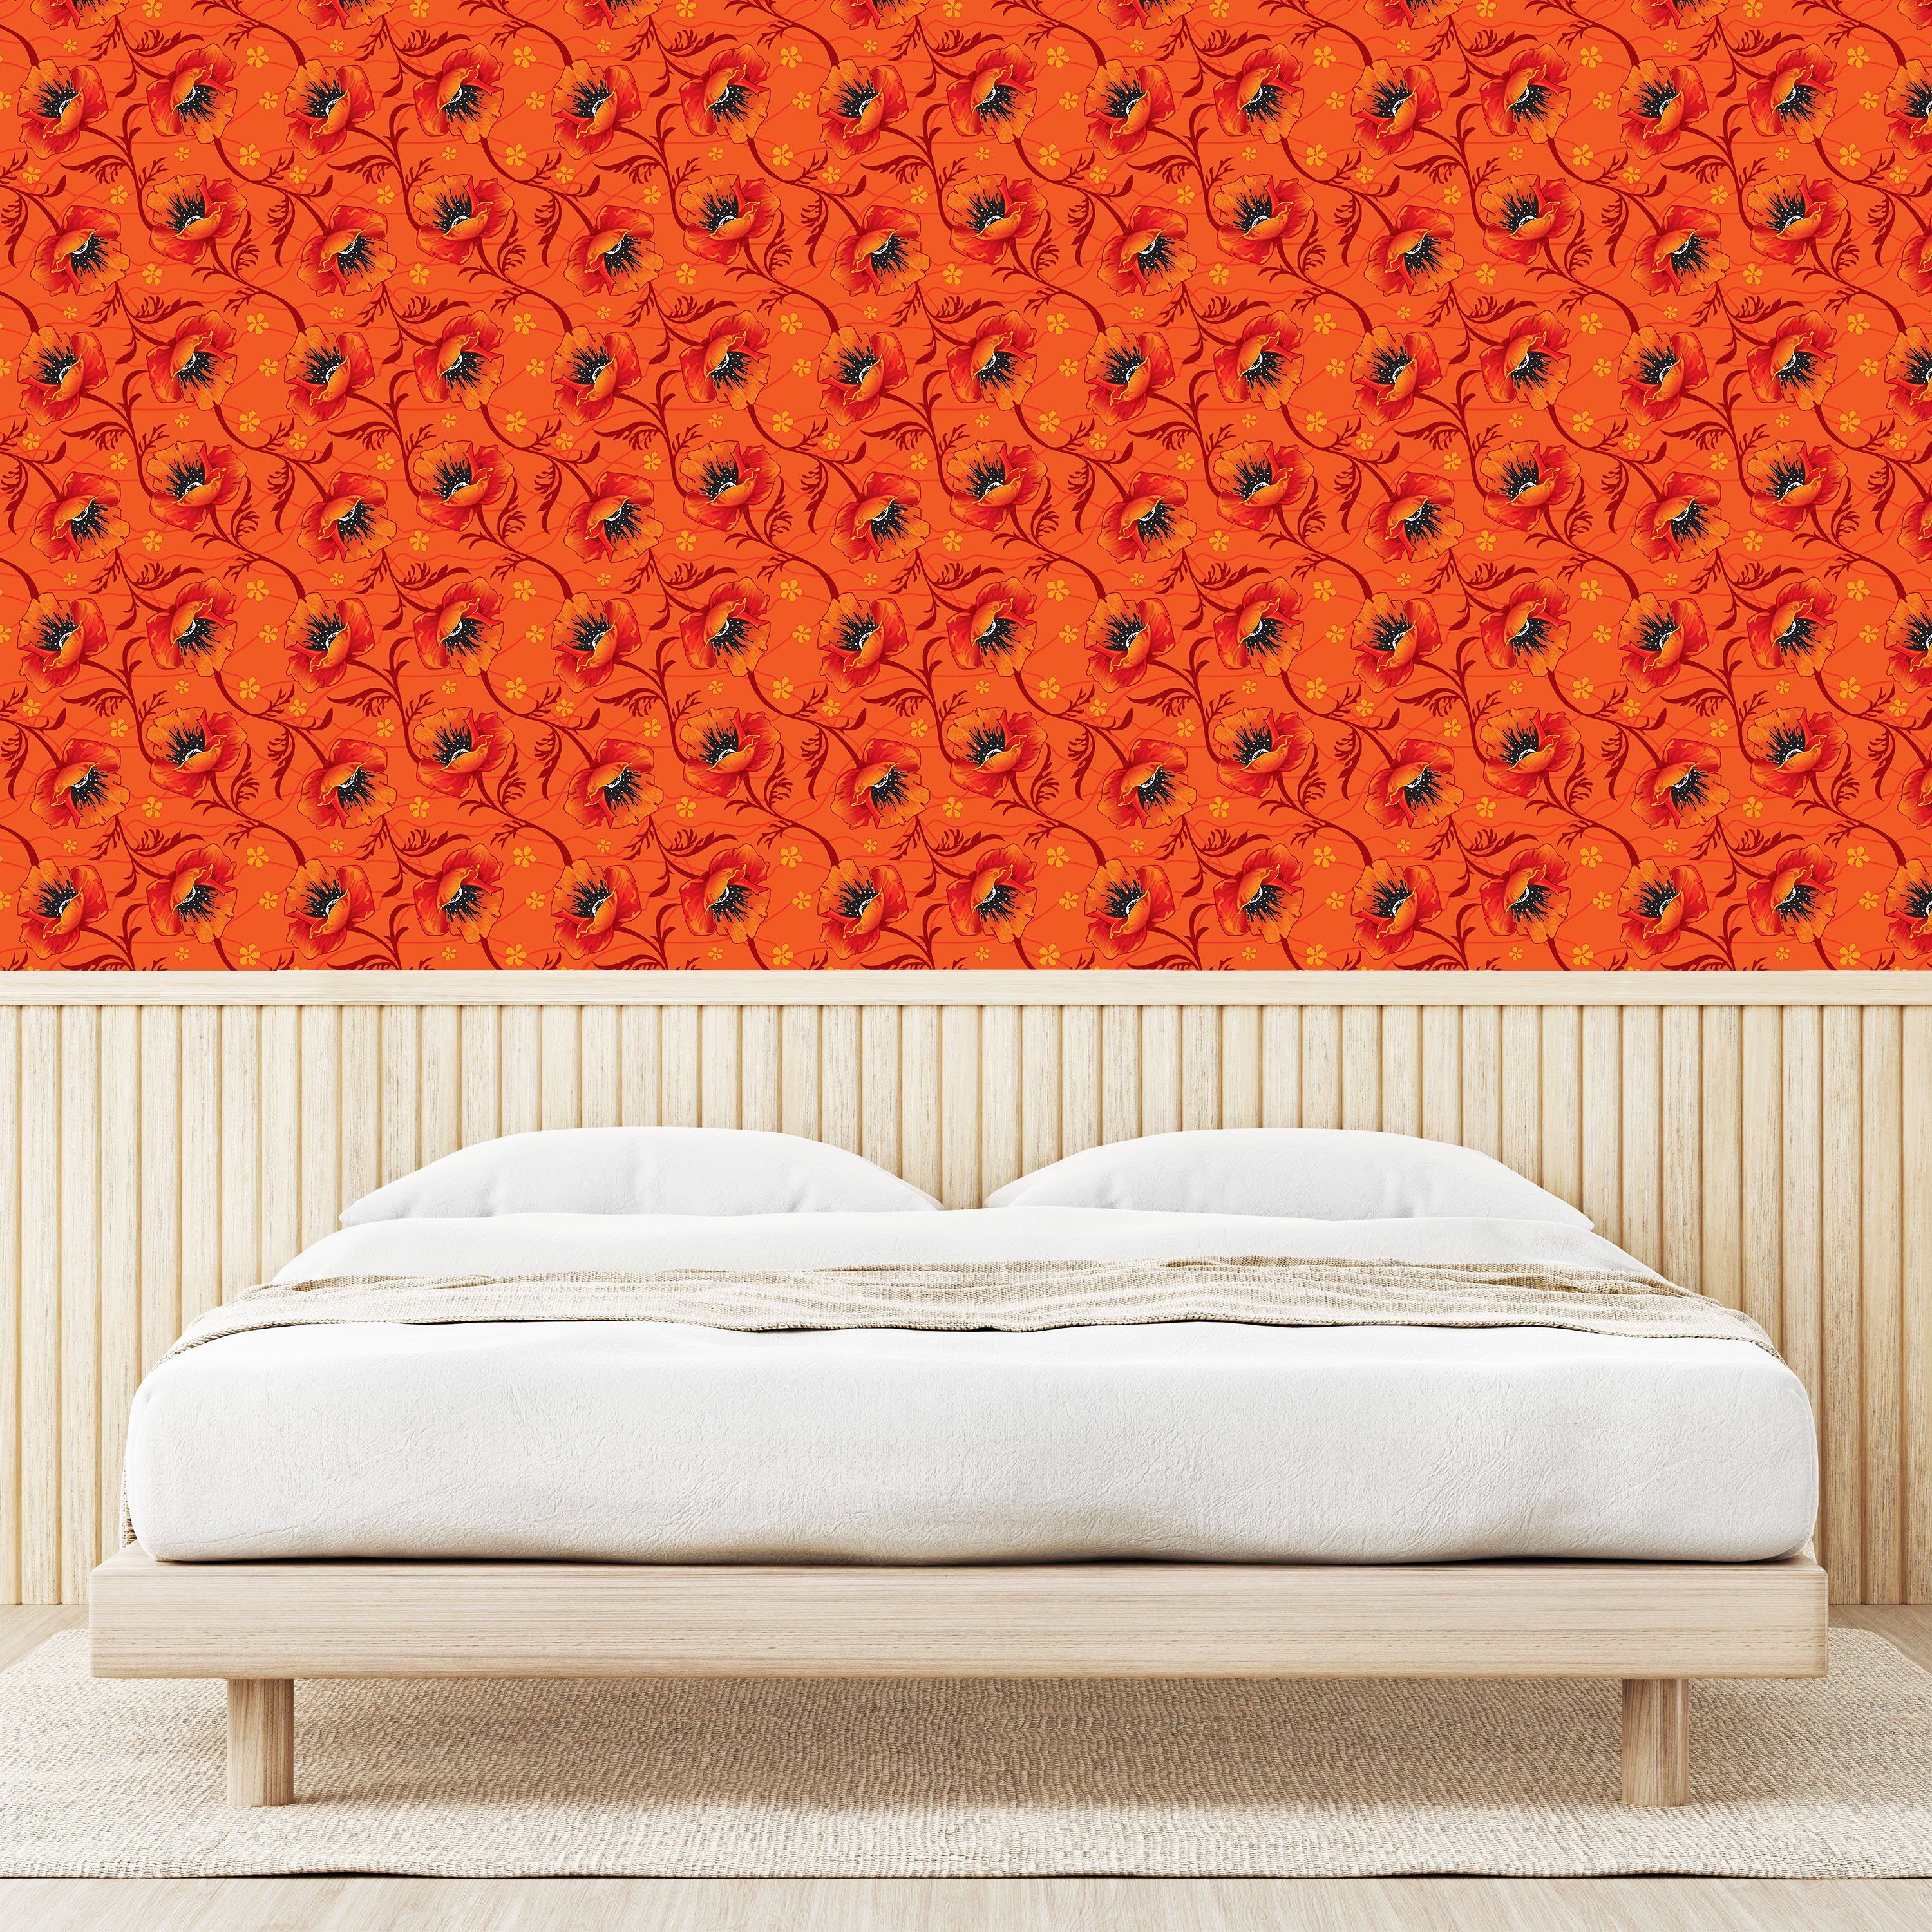 Abakuhaus Vinyltapete selbstklebendes Mohnblumen-Blumen Wohnzimmer Küchenakzent, Romantik Orange